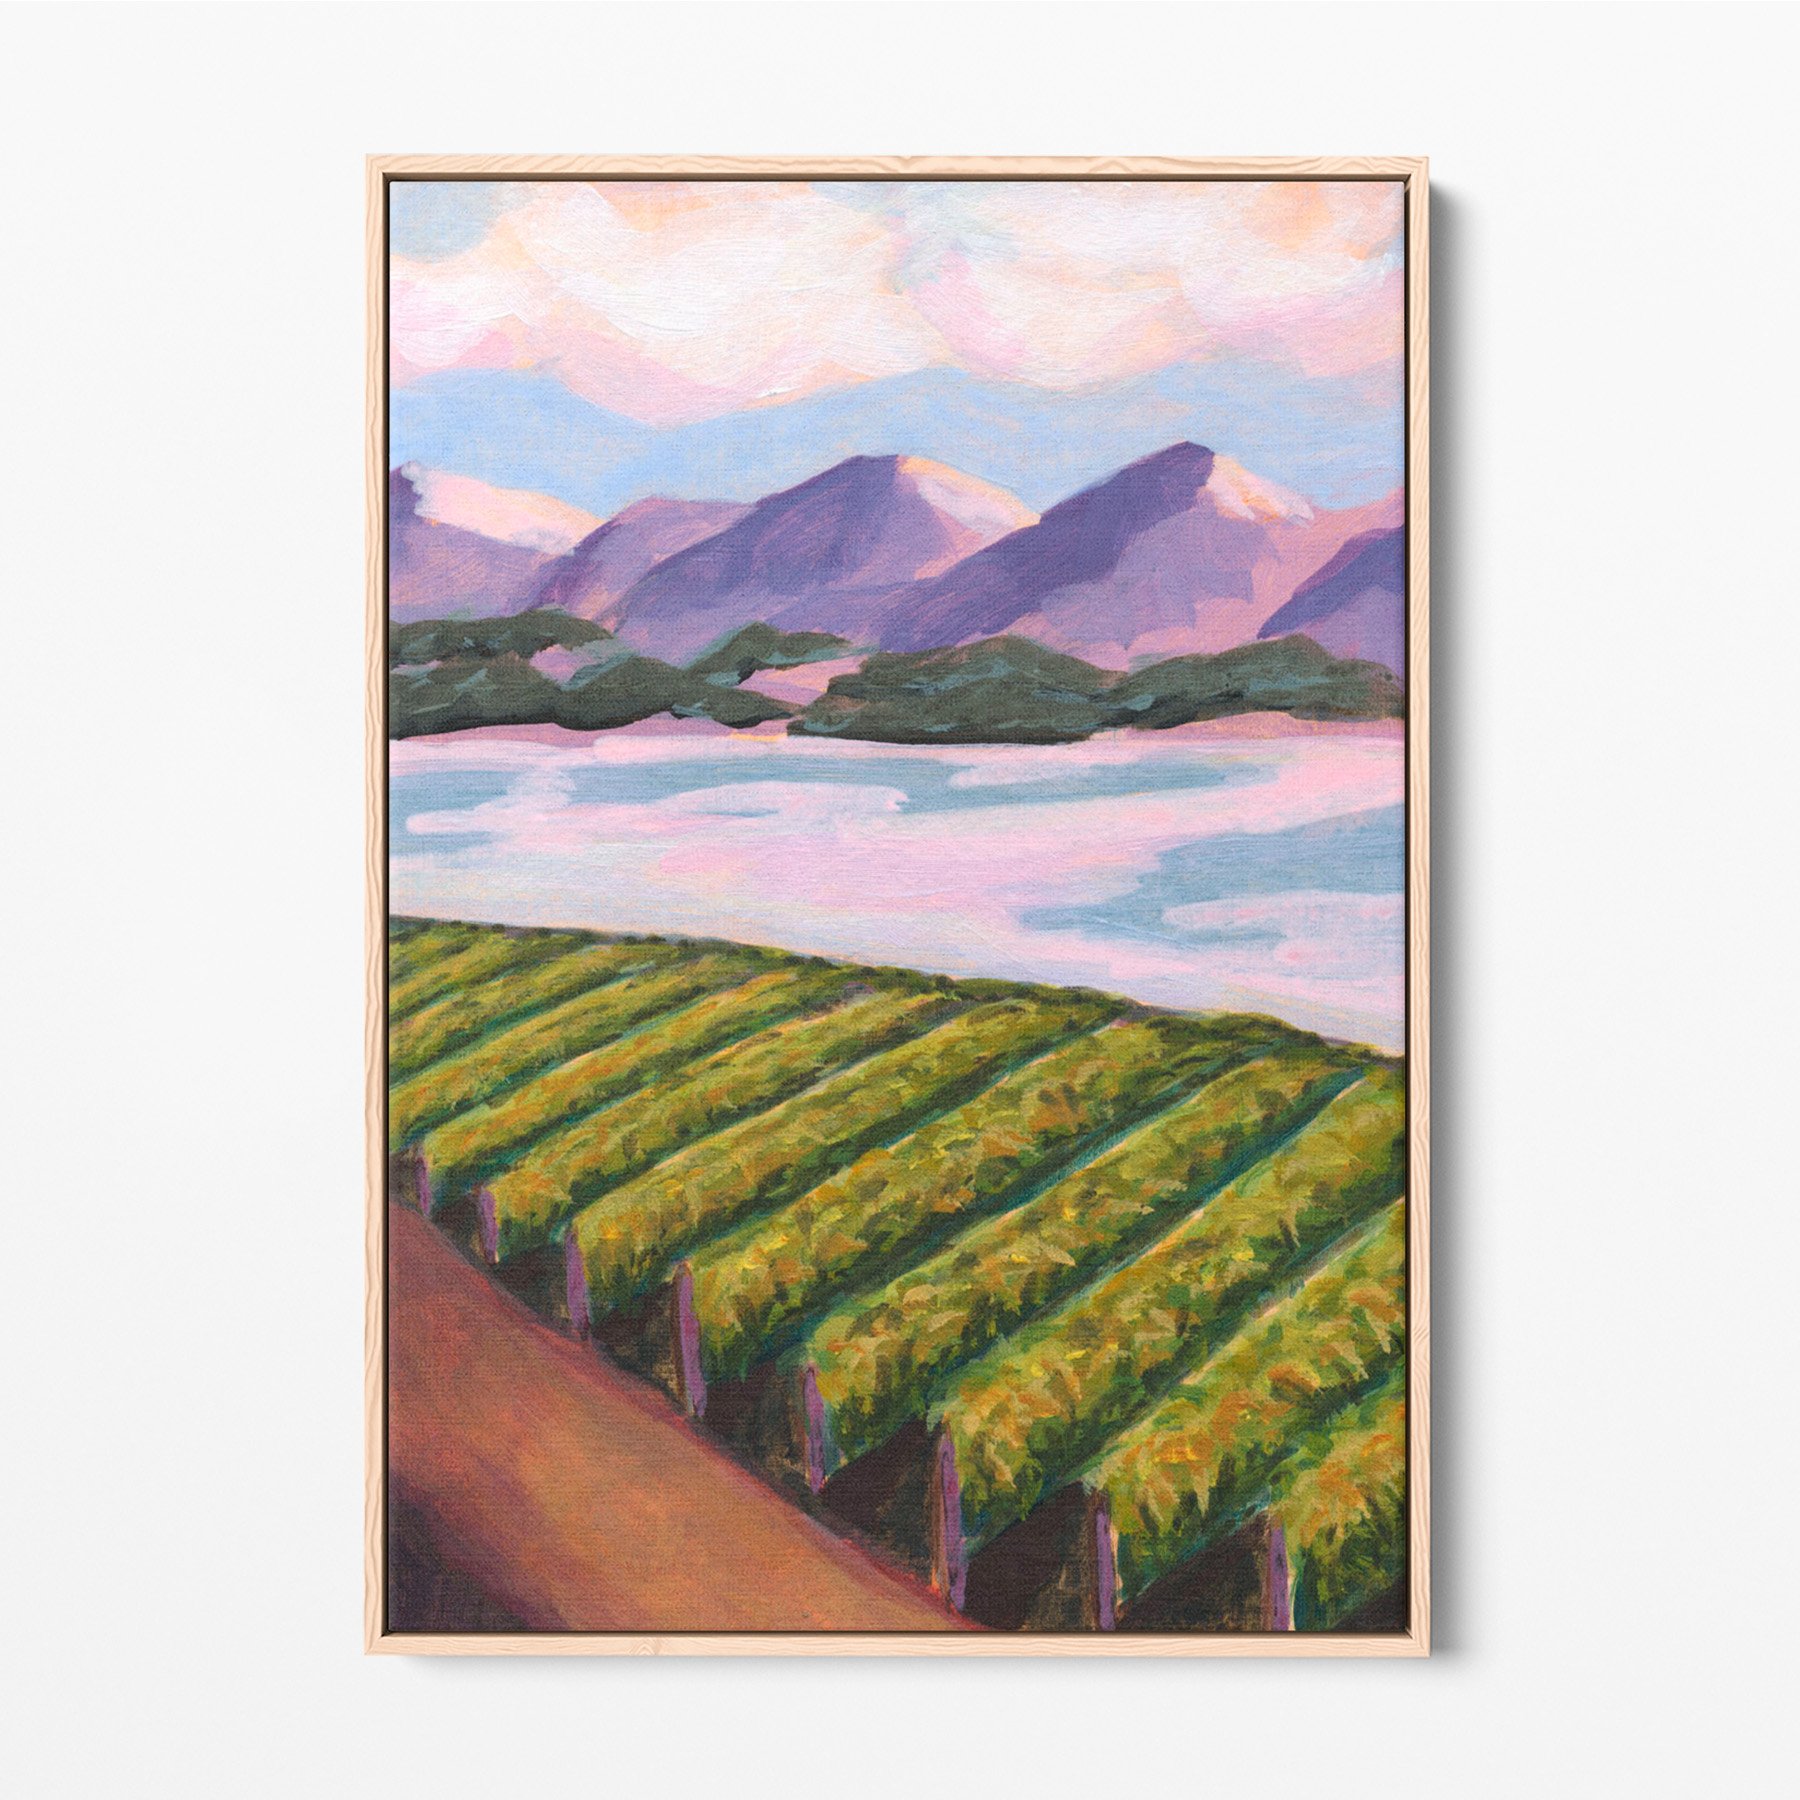 Vineyard at Dusk_Calex Studio_Landscape Painting_Framed Canvas Art_front.jpg